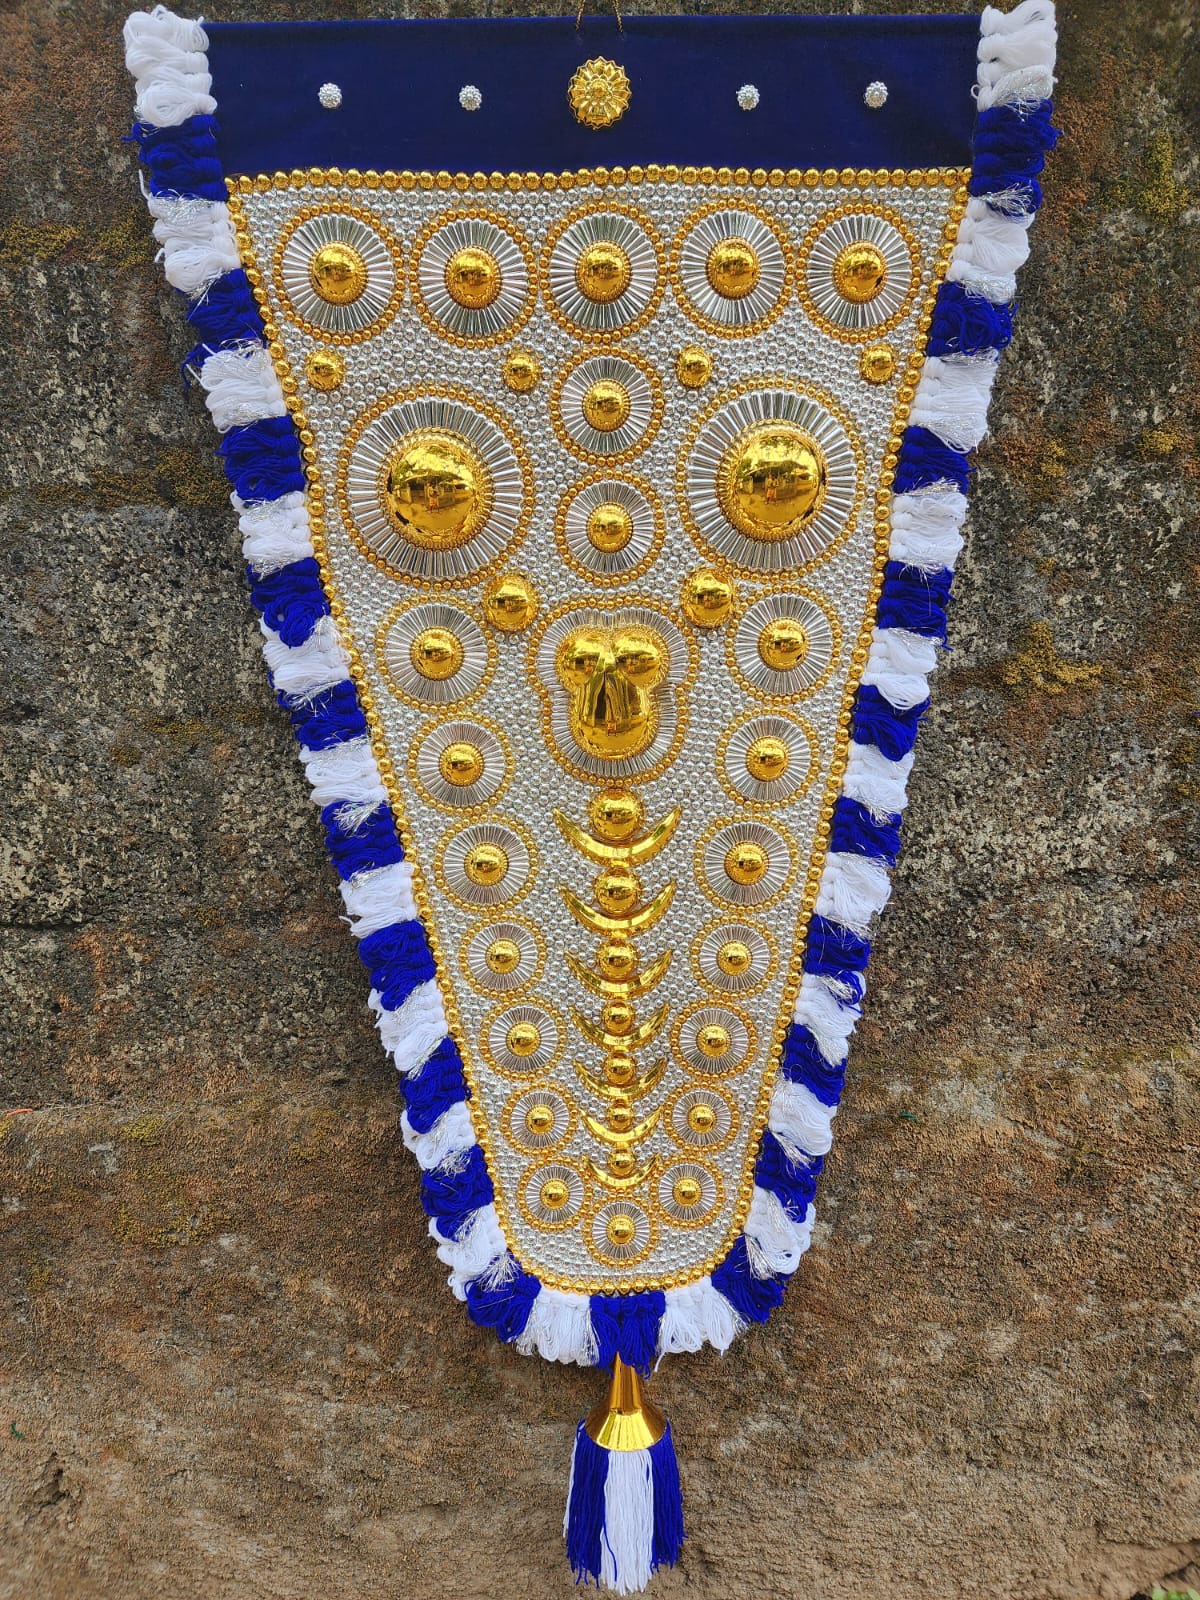 Mannar Craft Hand Made Nettipattam With Silver & Golden Work-Elephant Caparison (blue) 2 Feet